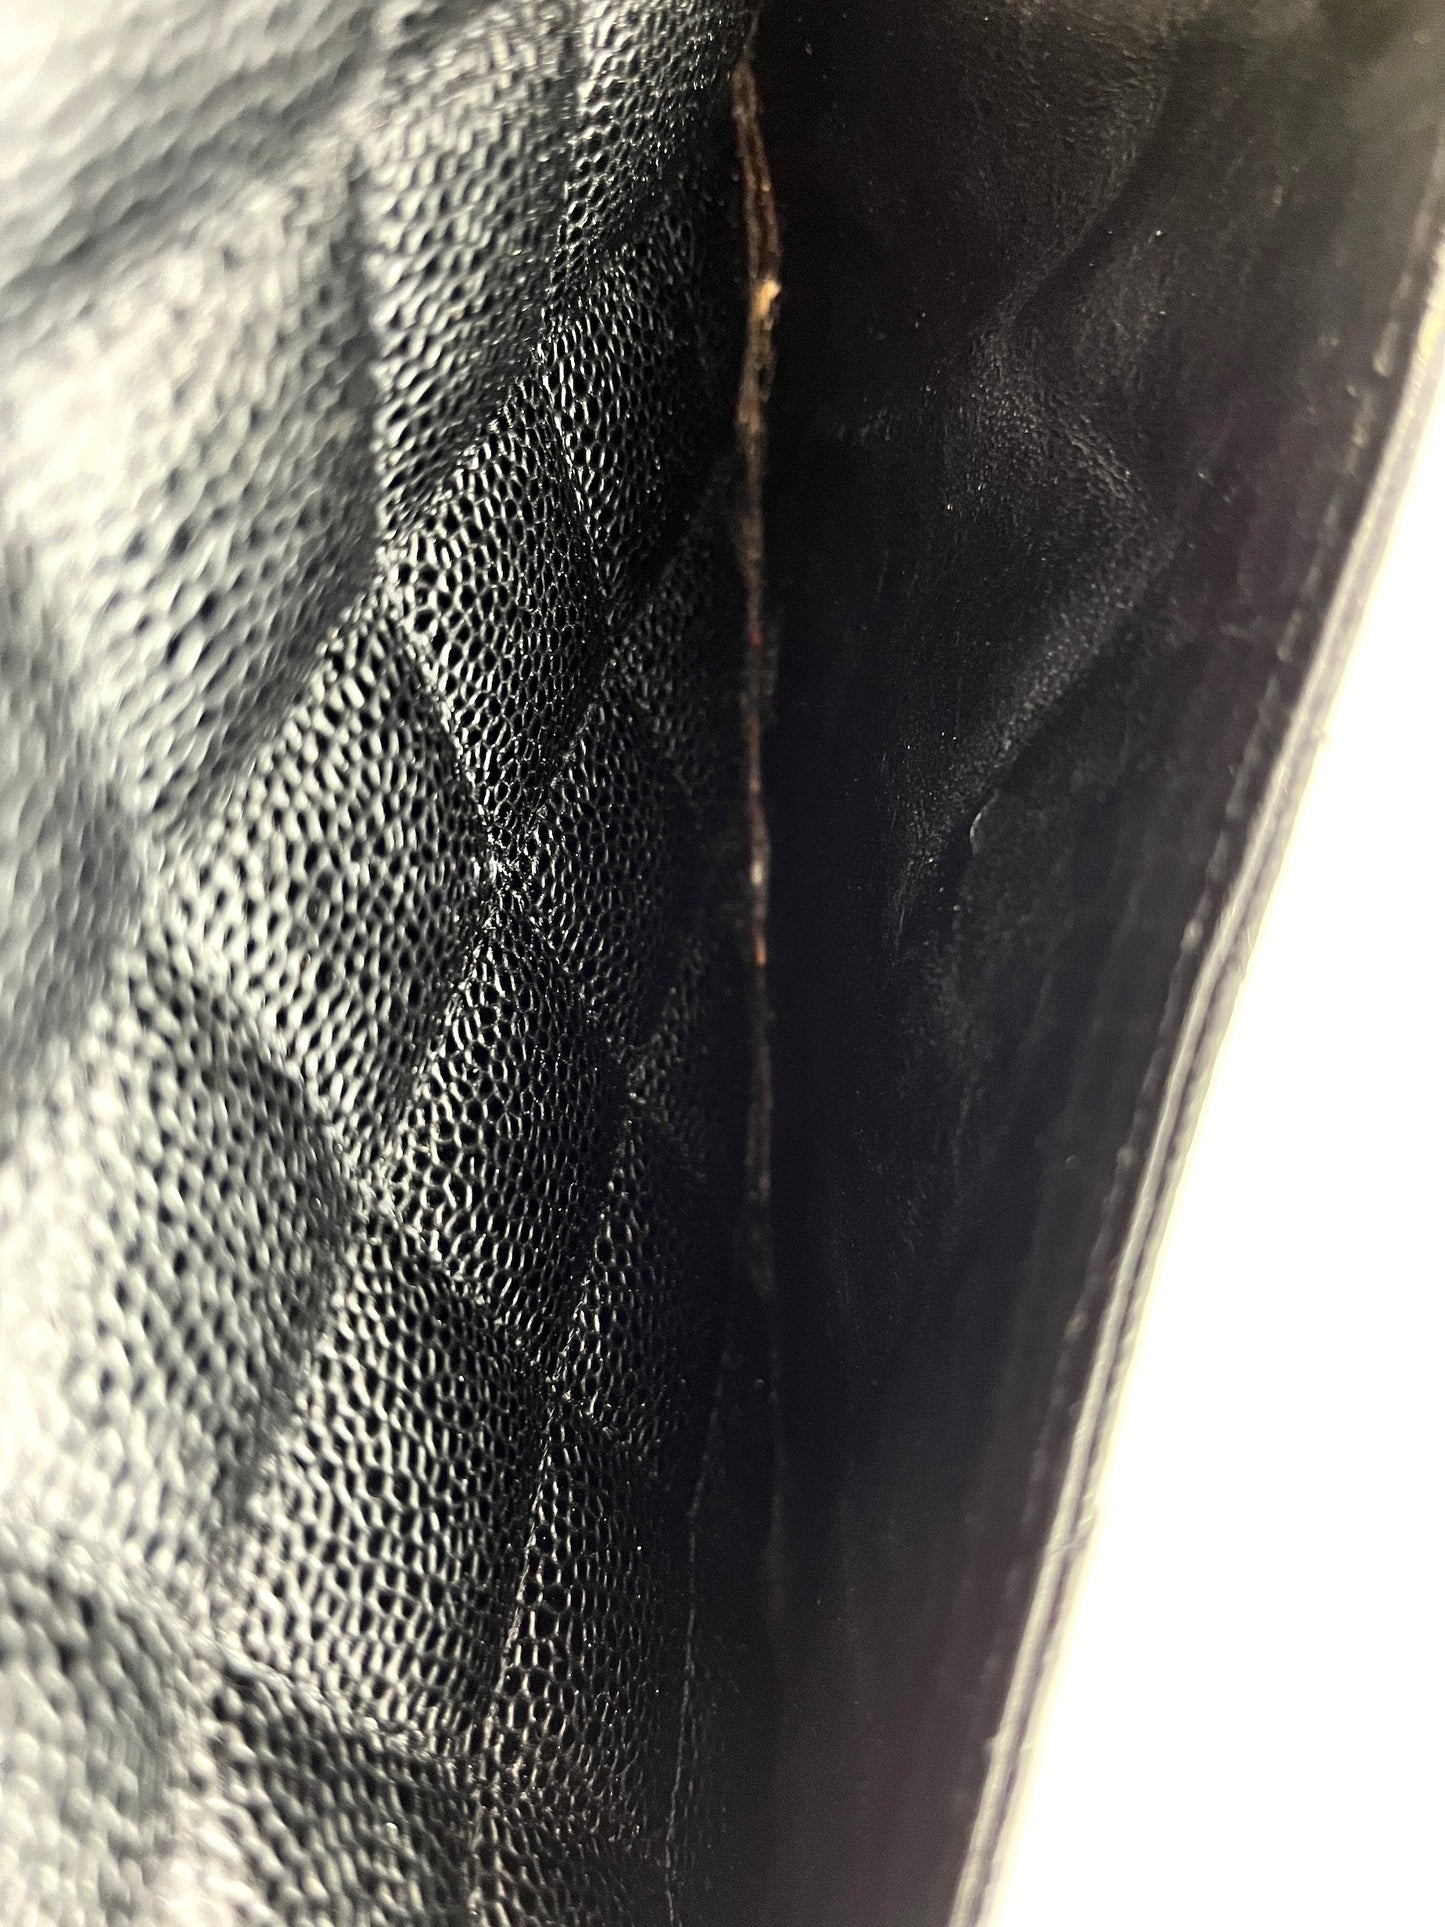 CHANEL Black Timeless Caviar Leather Bowler Bag